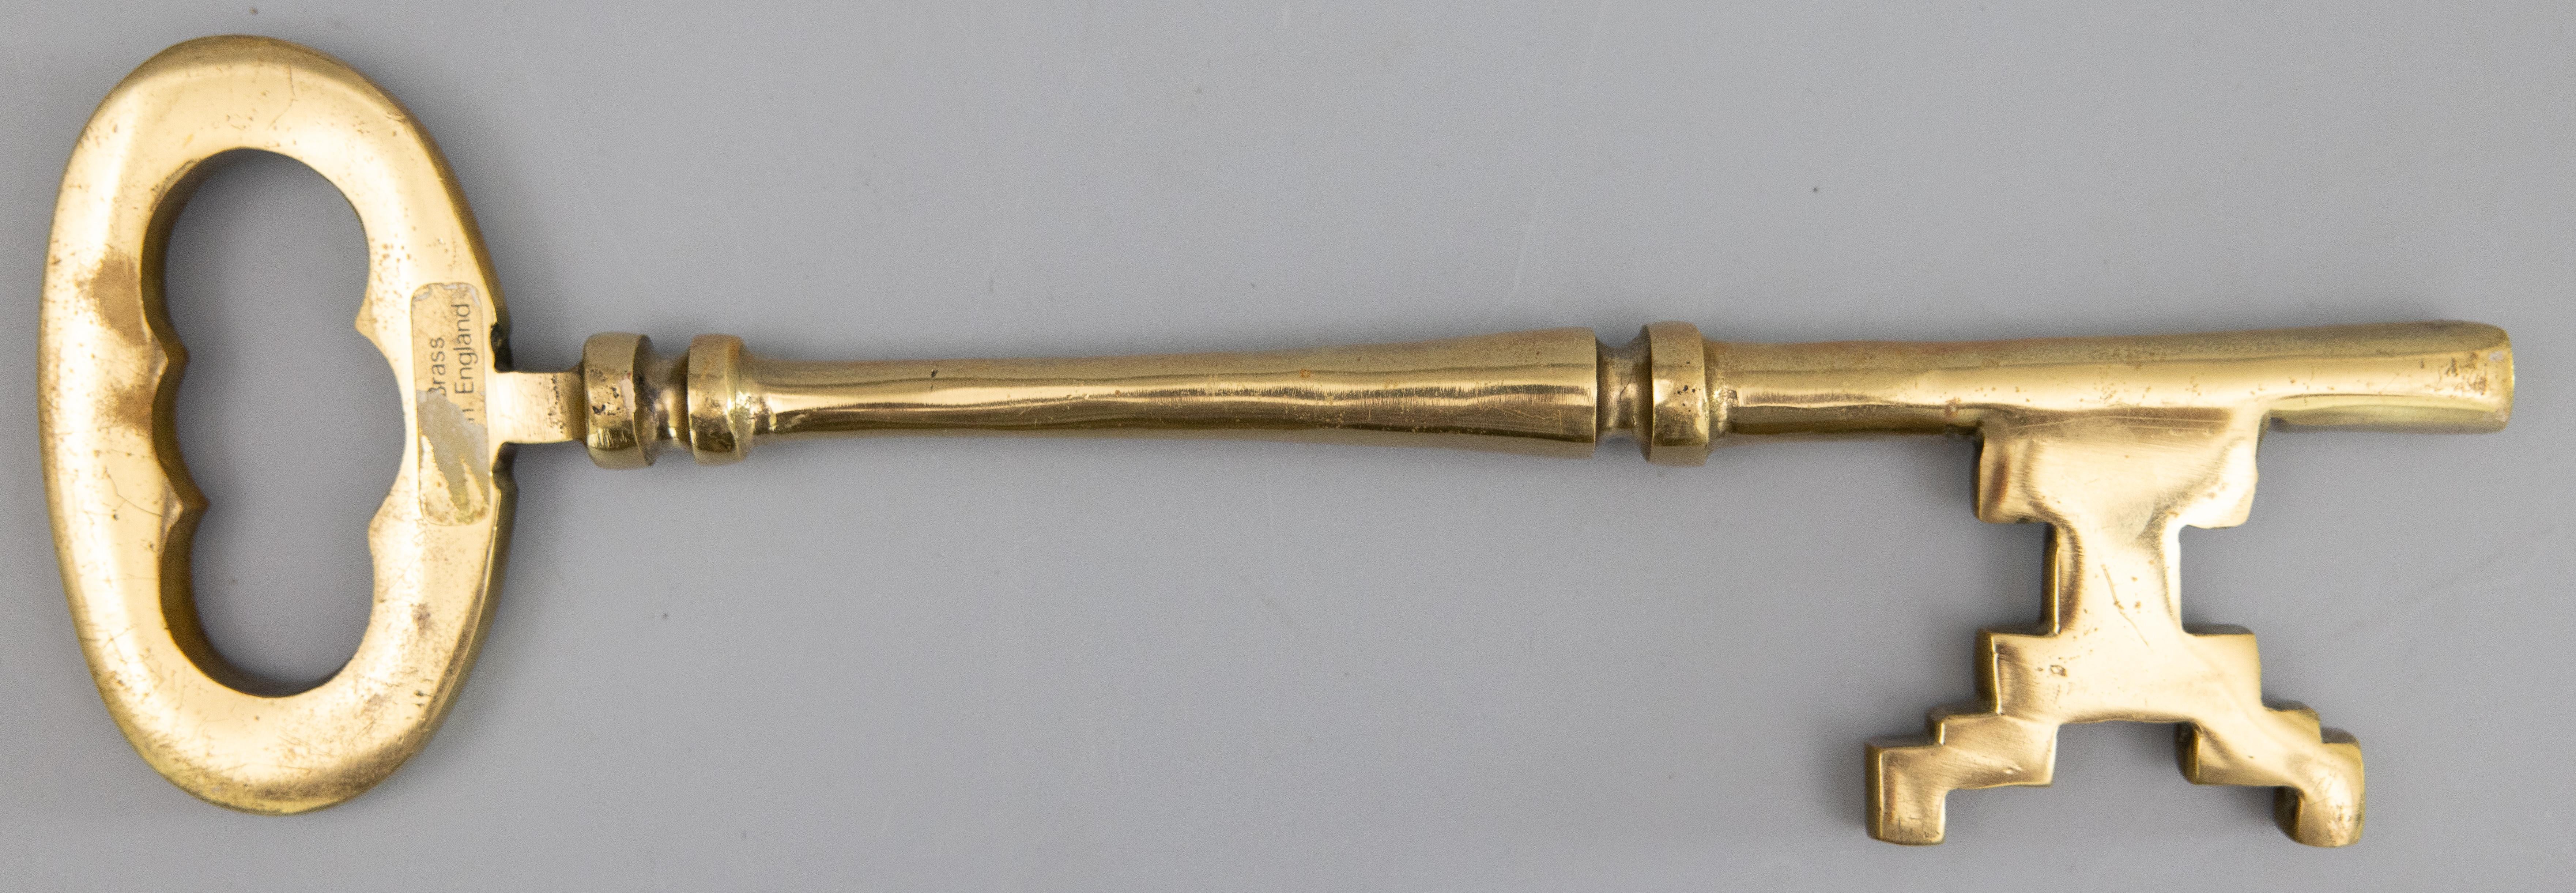 Mid-20th Century English Brass Oversized Key Objet d'Art For Sale 1